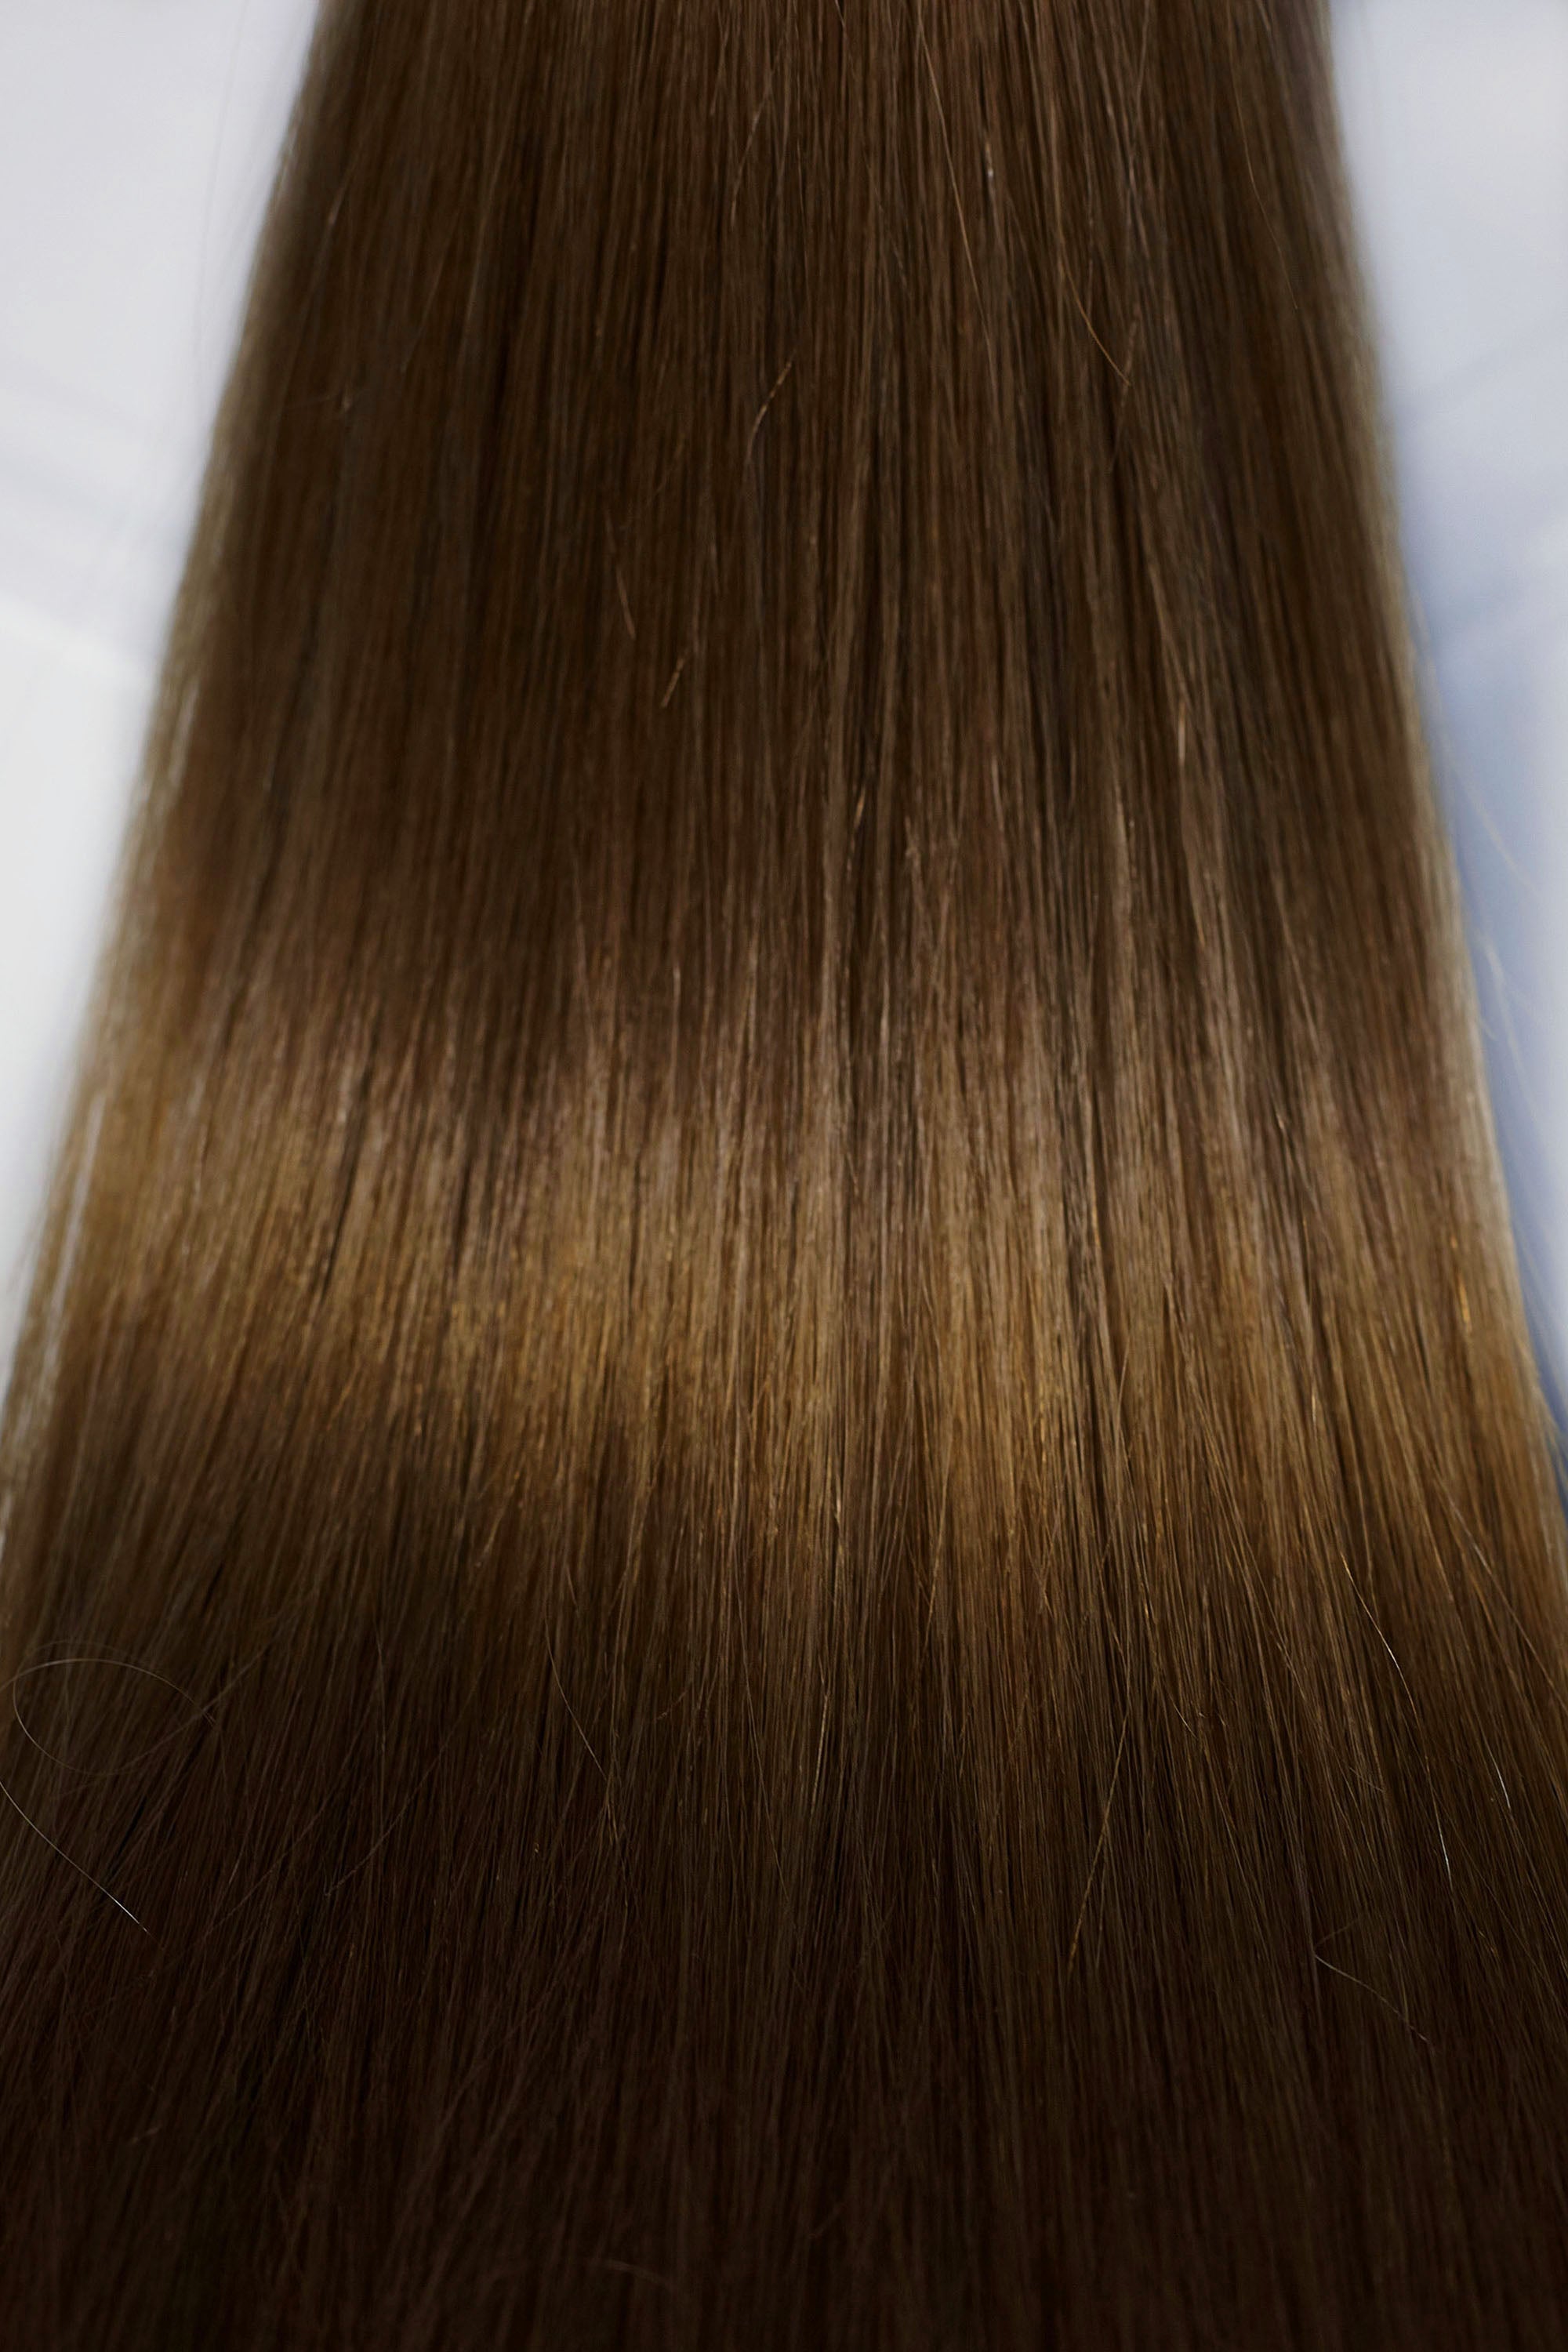 Behair professional Keratin Tip "Premium" 26" (65cm) Natural Straight Honey Walnut Brown #5 - 25g (Micro - 0.5g each pcs) hair extensions